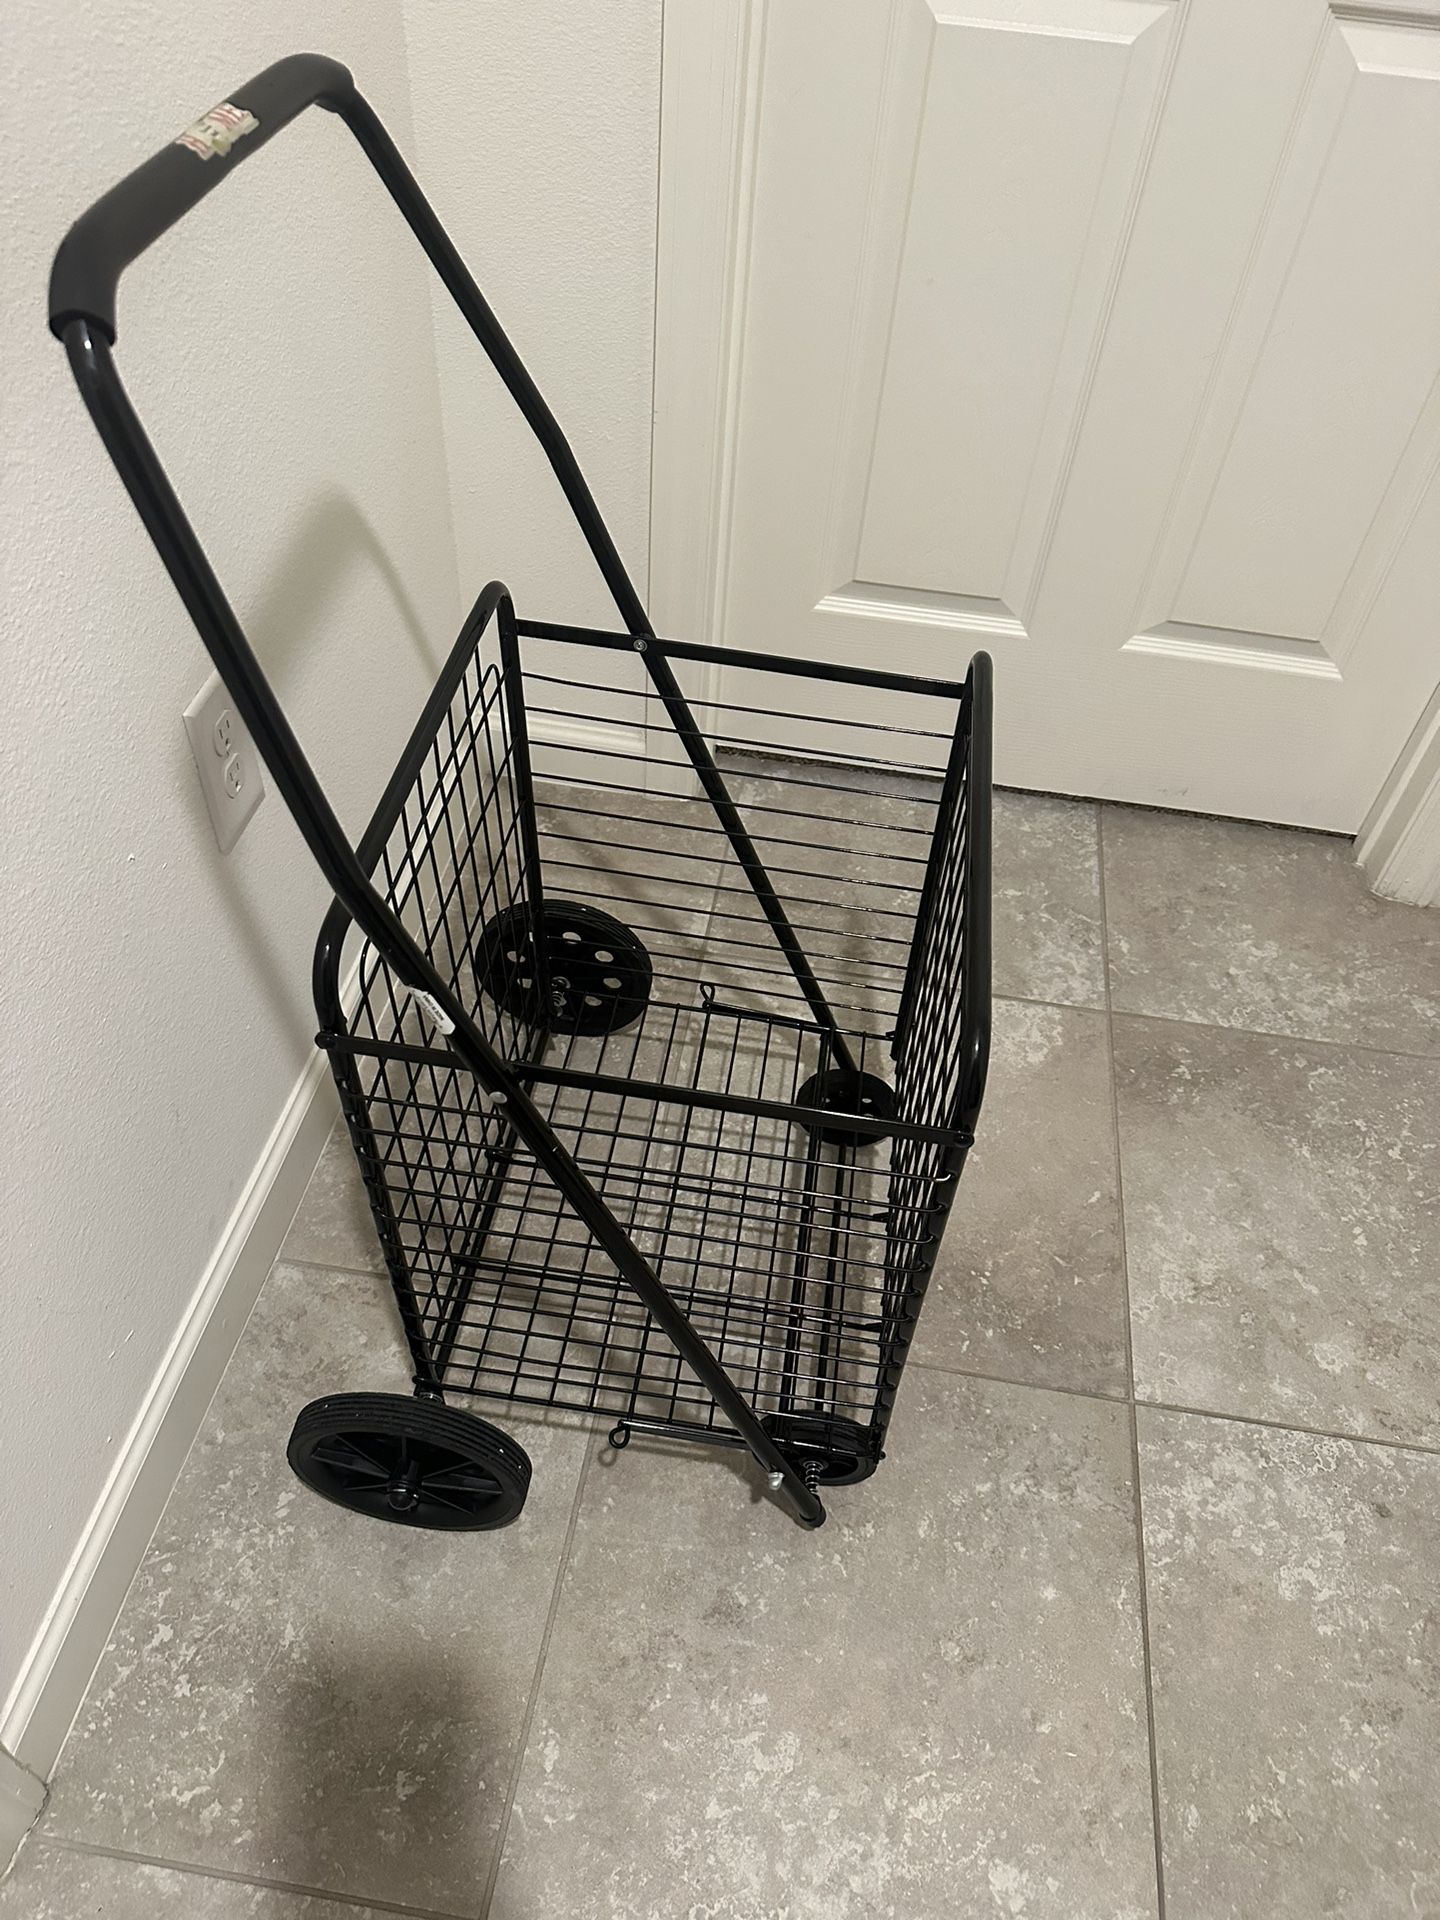 Medium Folding Shopping Cart Utility Trolley, Single Basket, Portable for Grocery, Laundry, Travel. $25 •